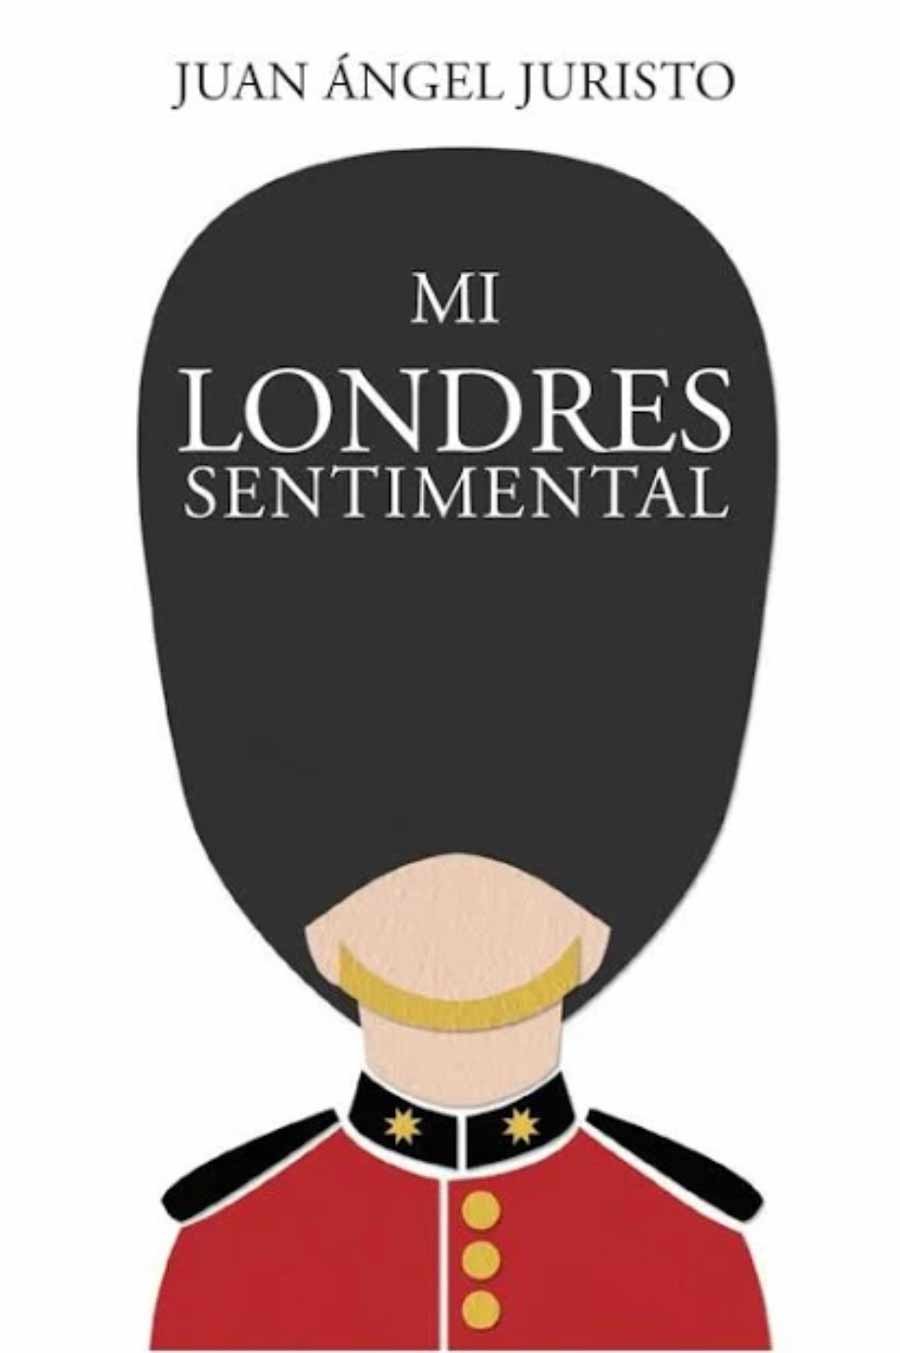 Portada de "Mi Londres sentimental", de Juan Ángel Juristo